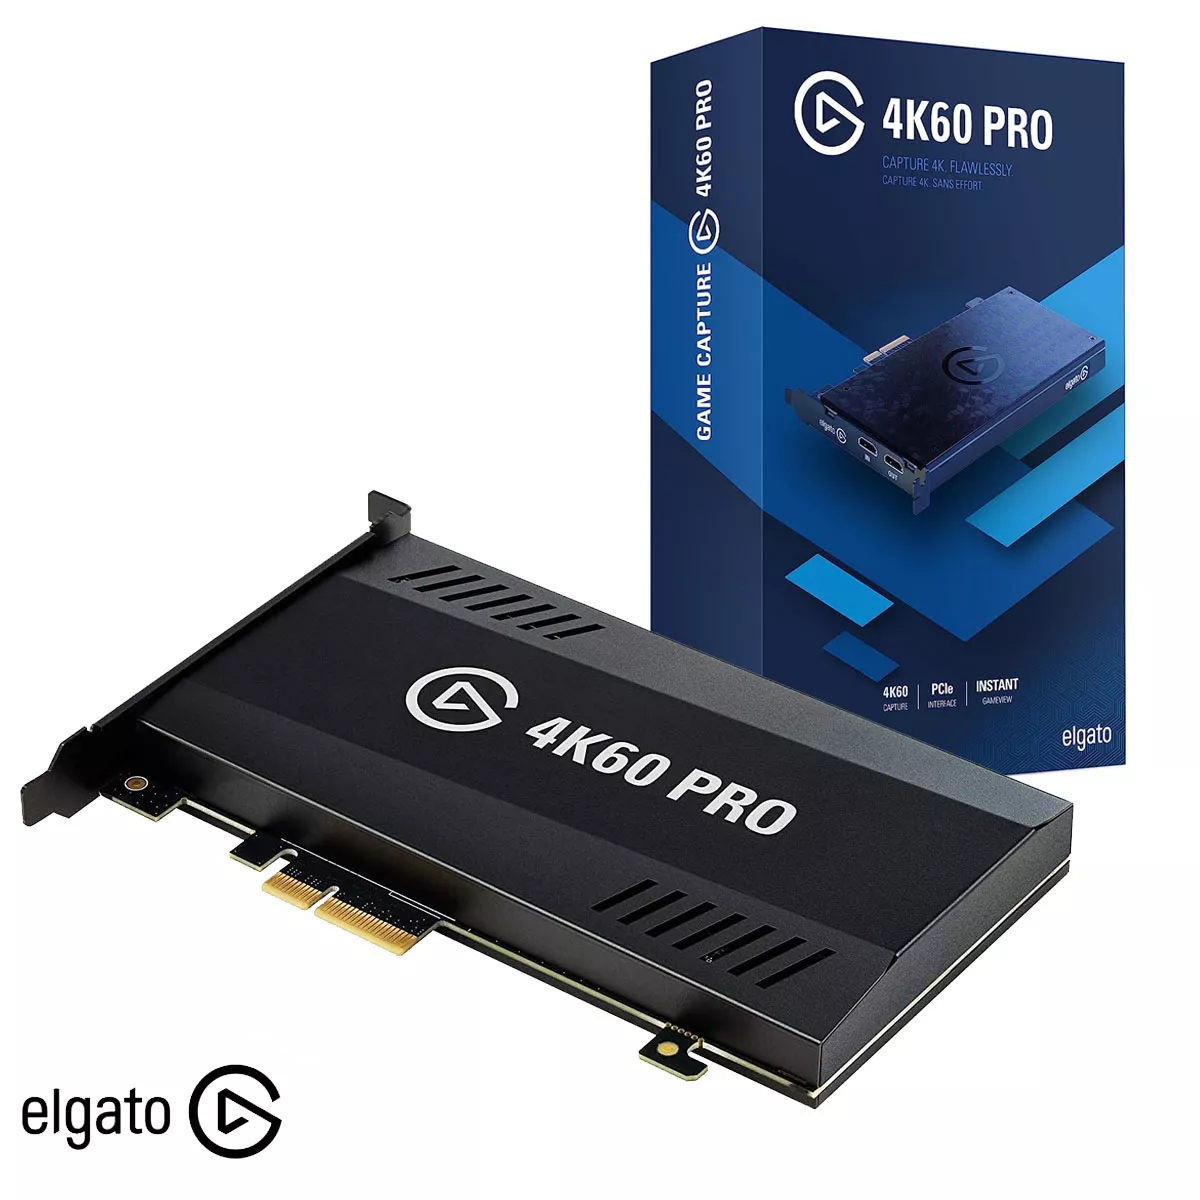 Capturadora de Video Elgato 4K60 PRO HDR10 4K PCIe